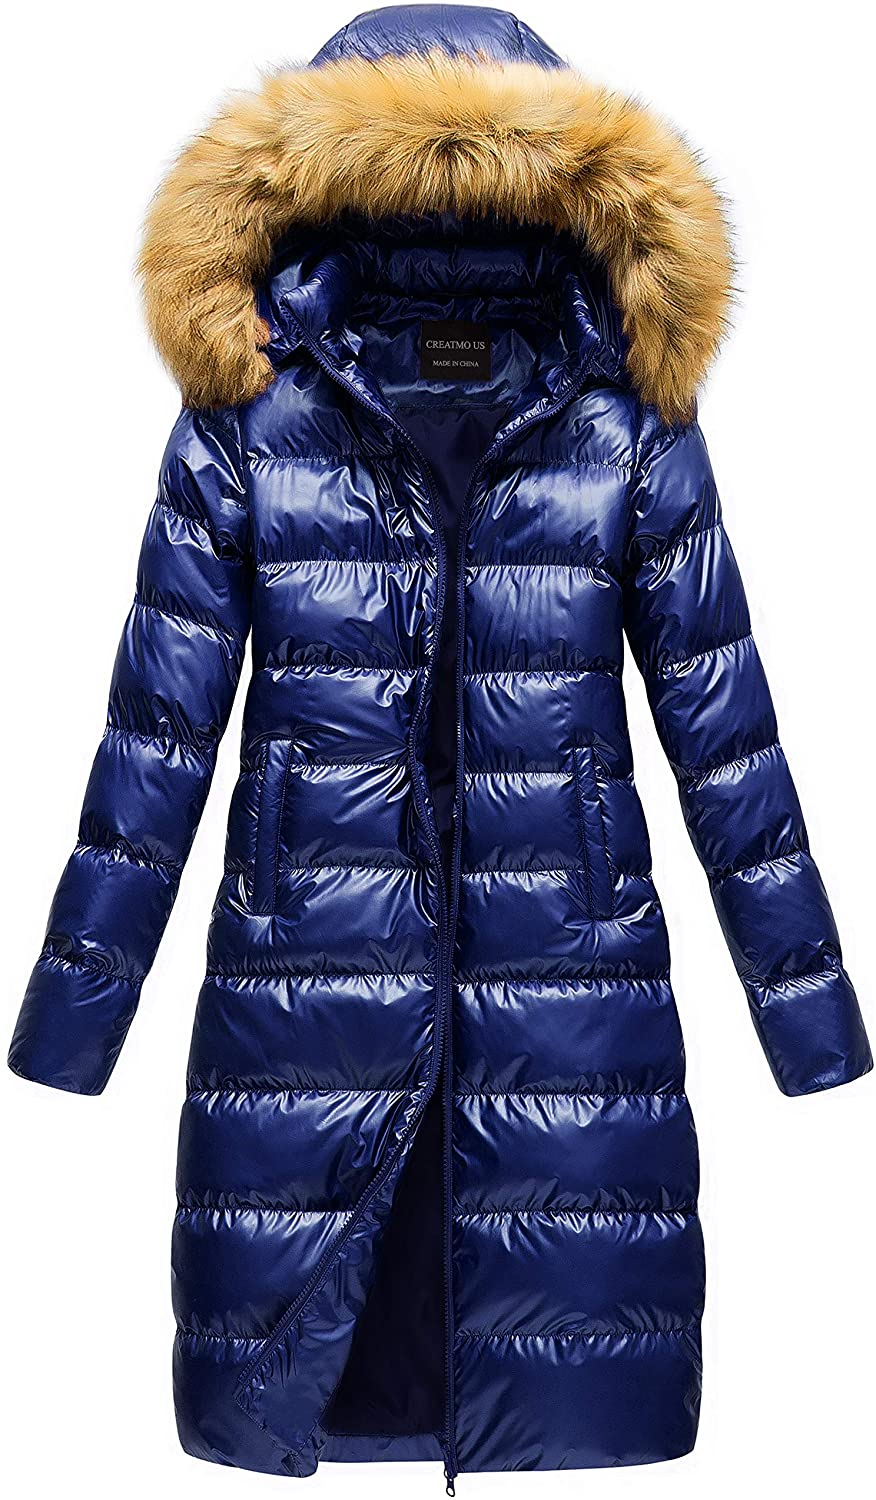  CREATMO US Women's Warm Winter Coat Heavy Puffer